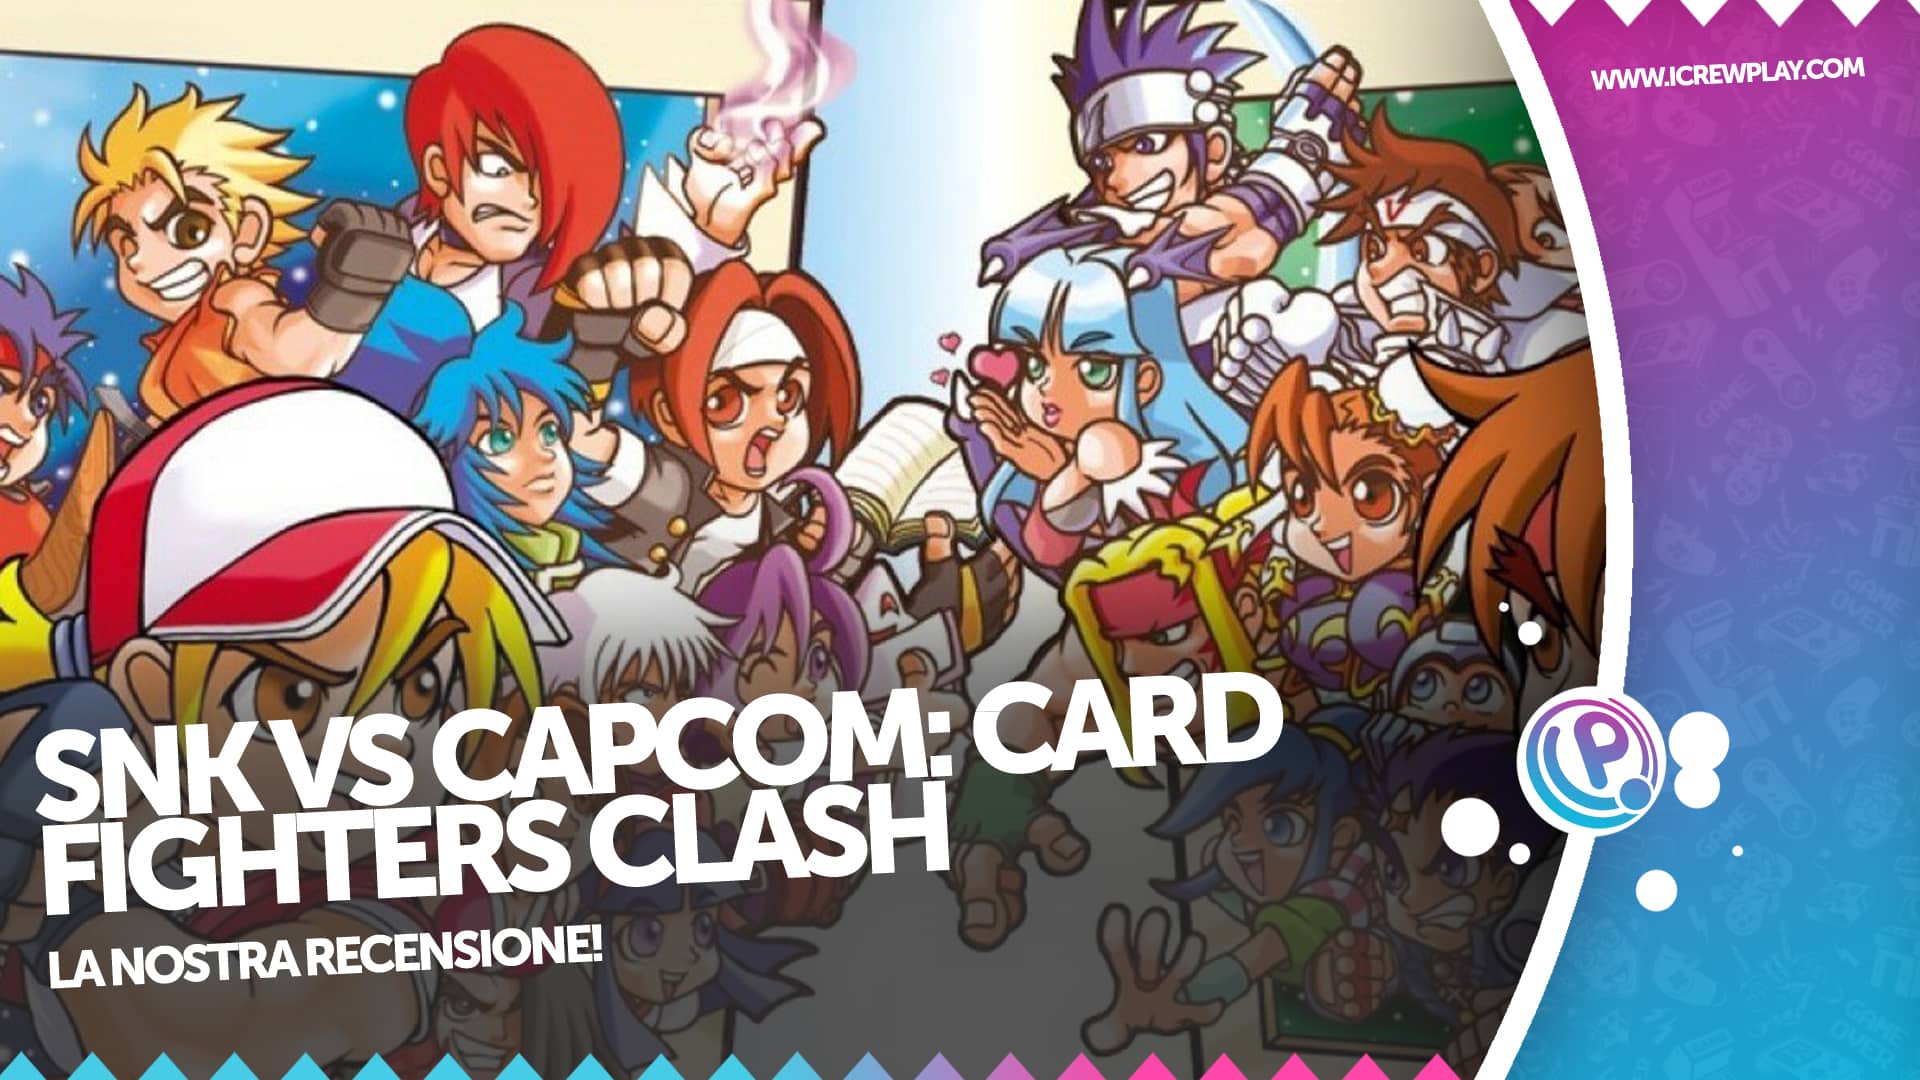 SNK vs Capcom Card Fighters Clash